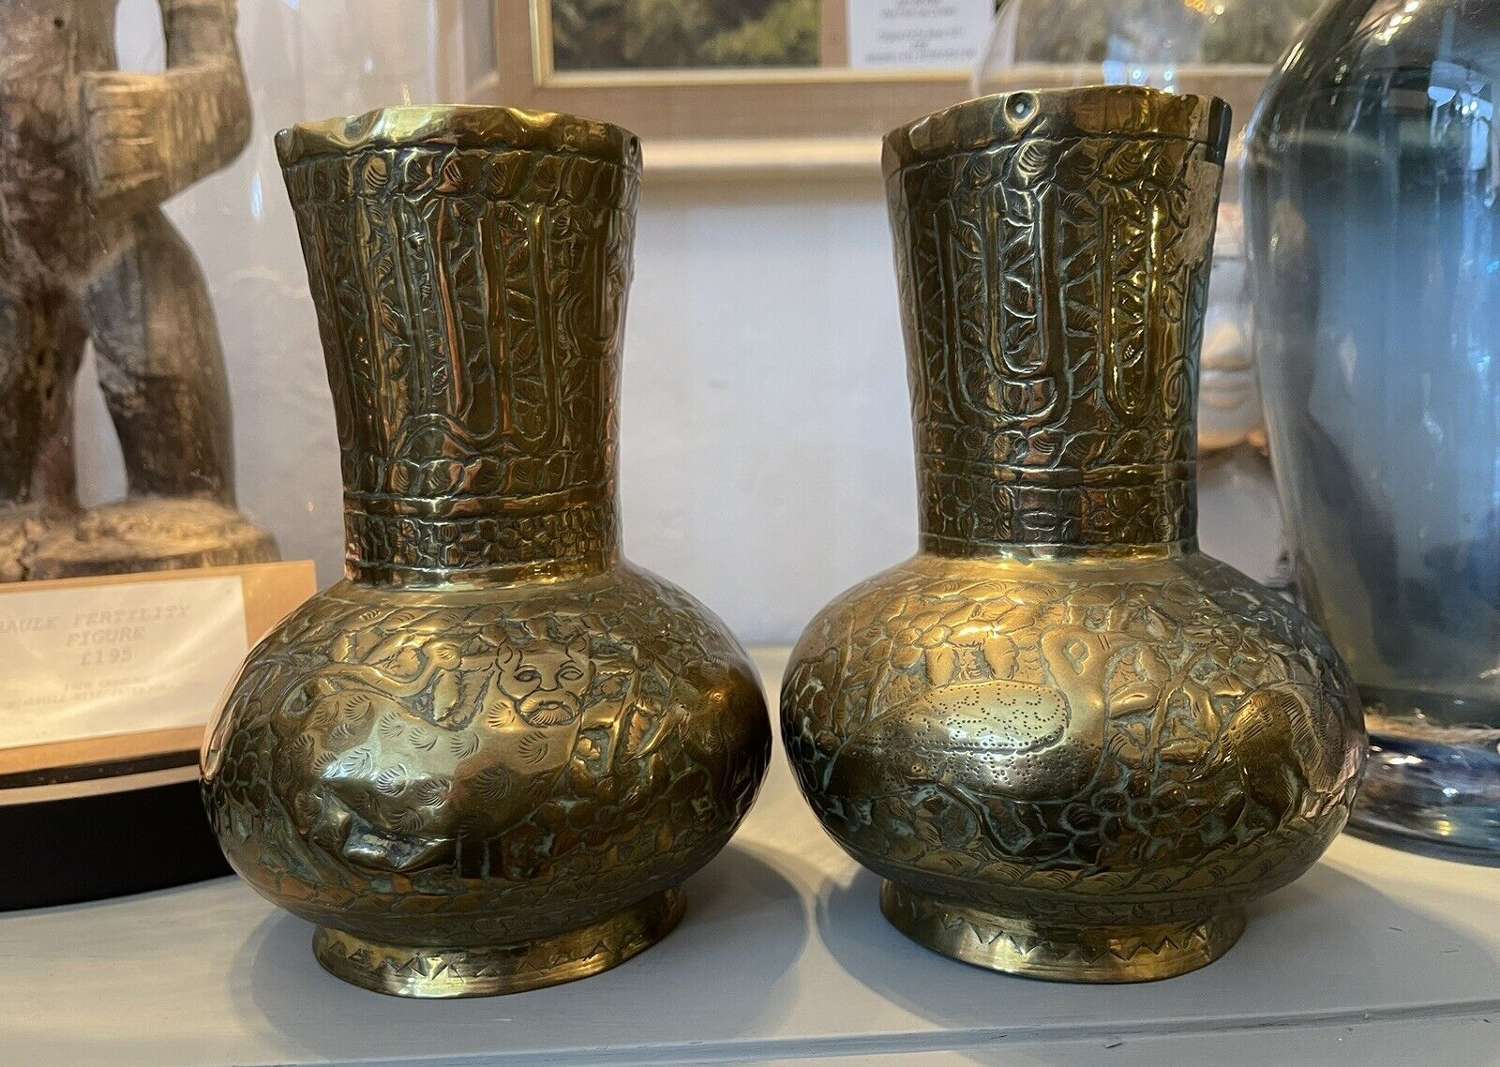 Brass Islamic vases